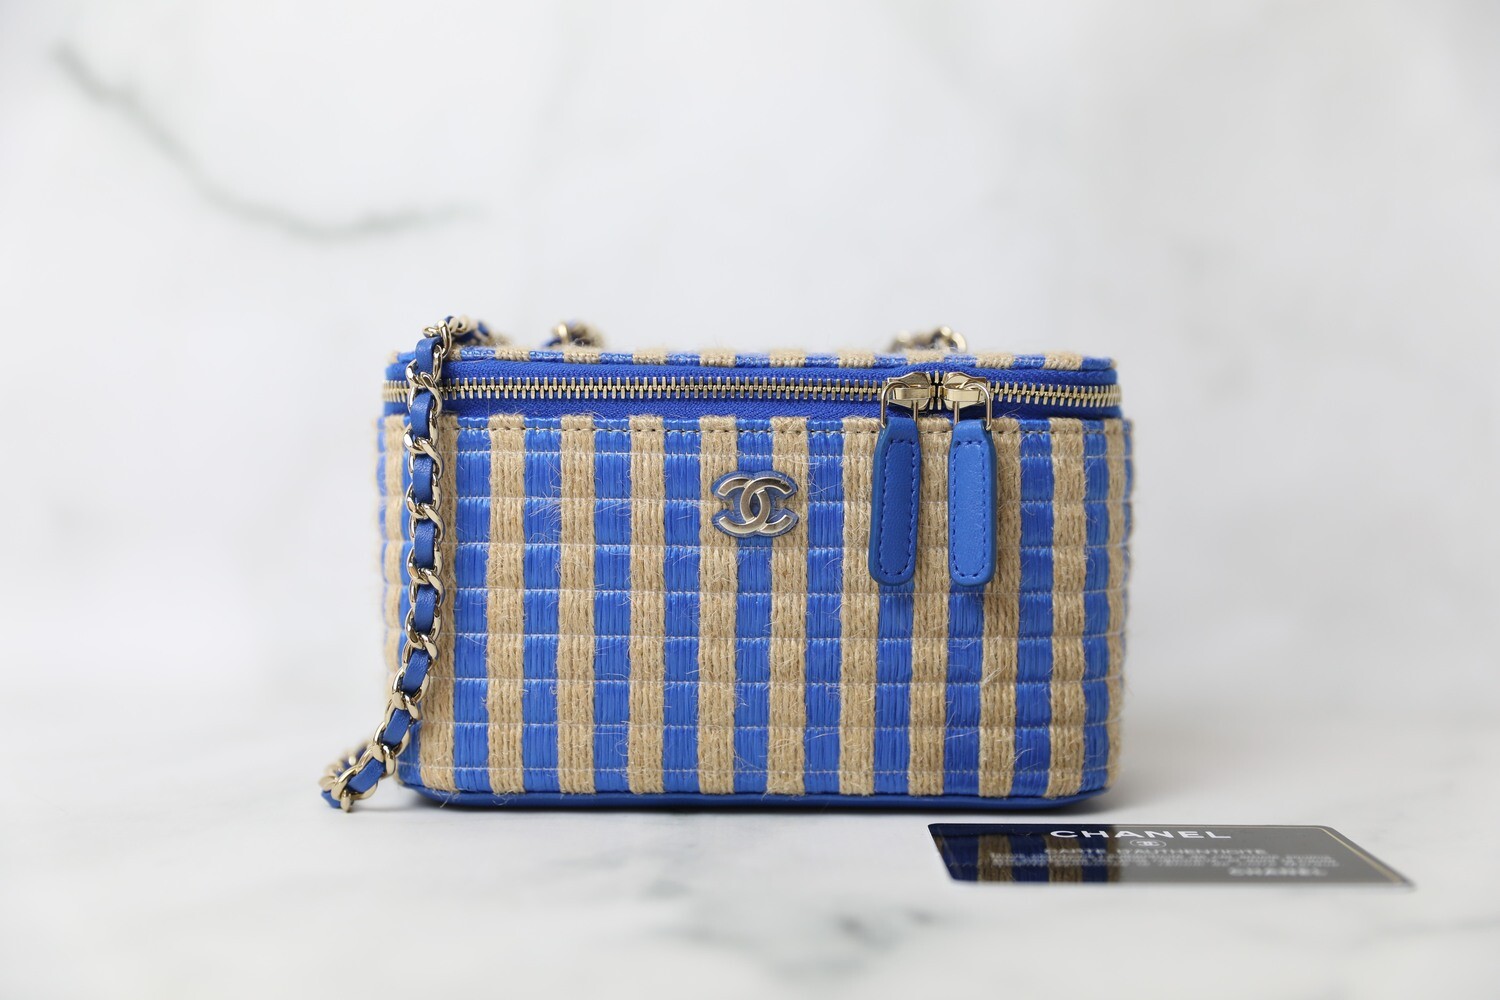 Chanel Vanity with Chain, Blue and Raffia, New in Box WA001